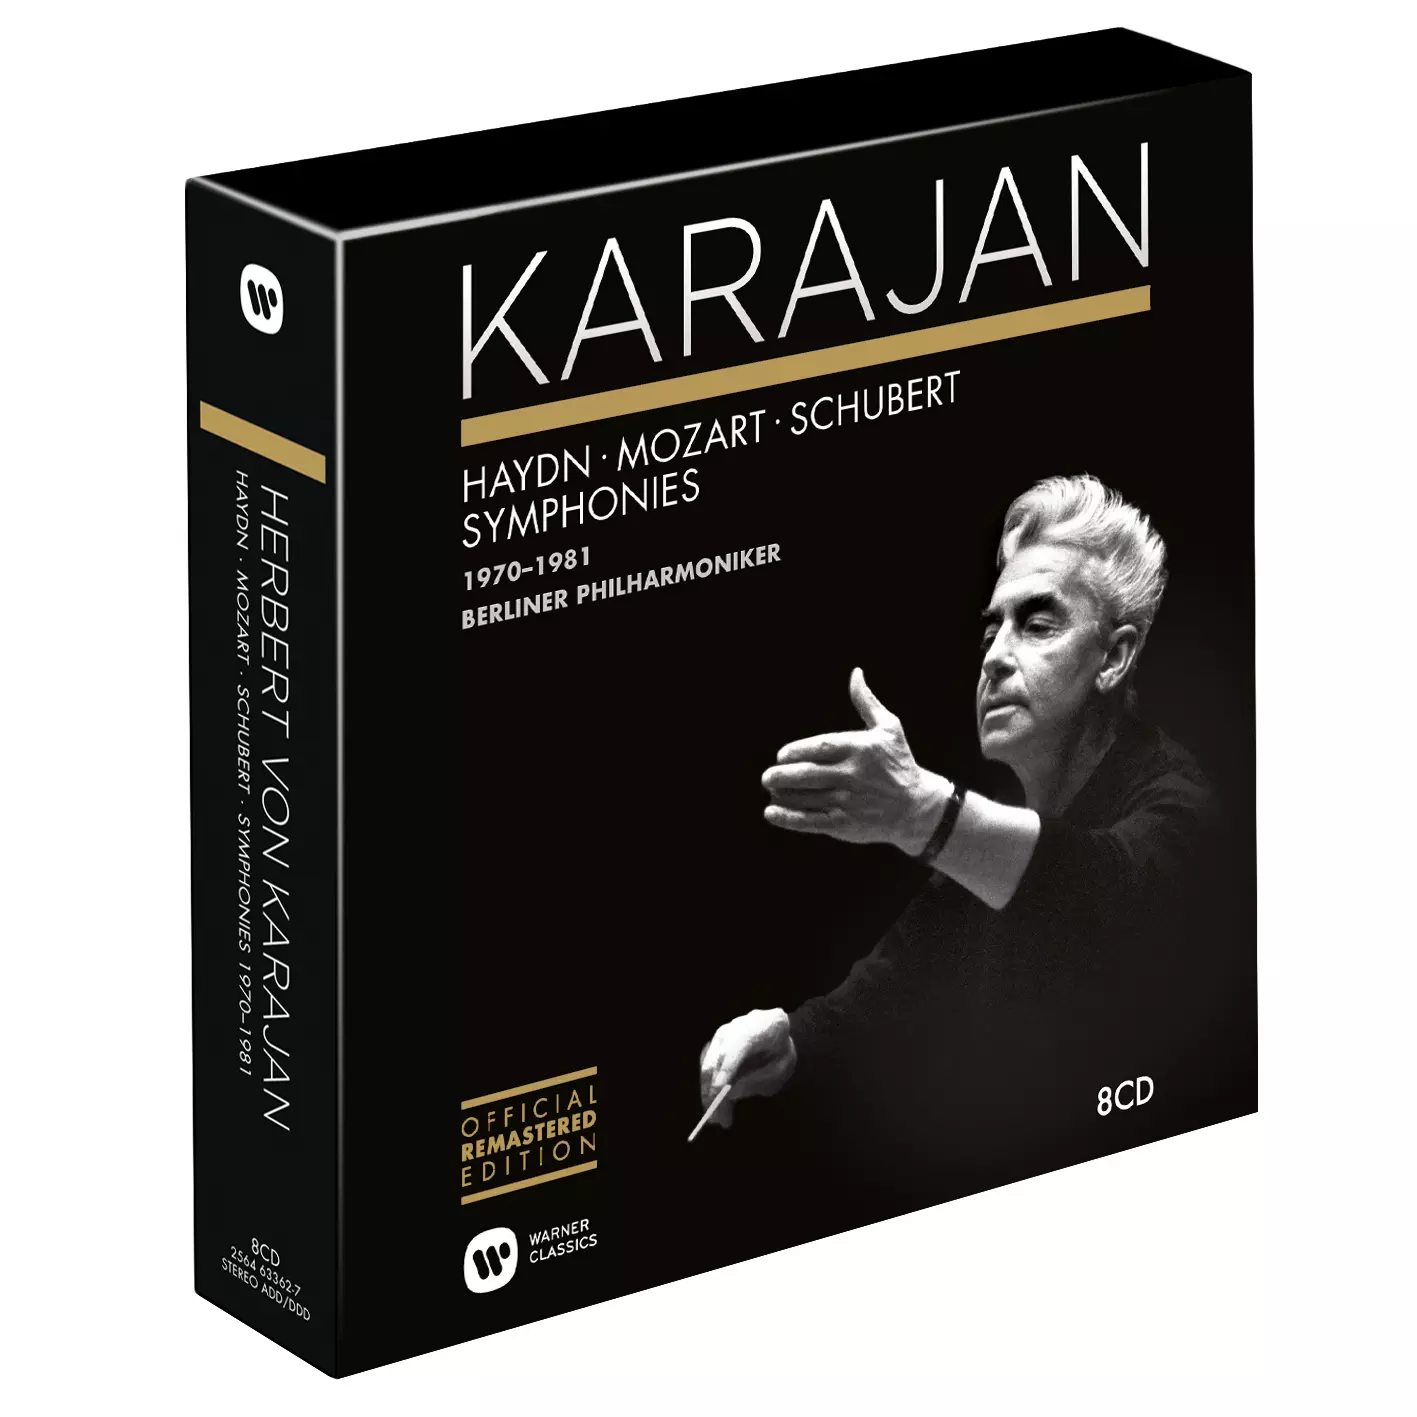 Karajan 2014: Classical & Early Romantic recordings Sep 1970 - Jan 1981